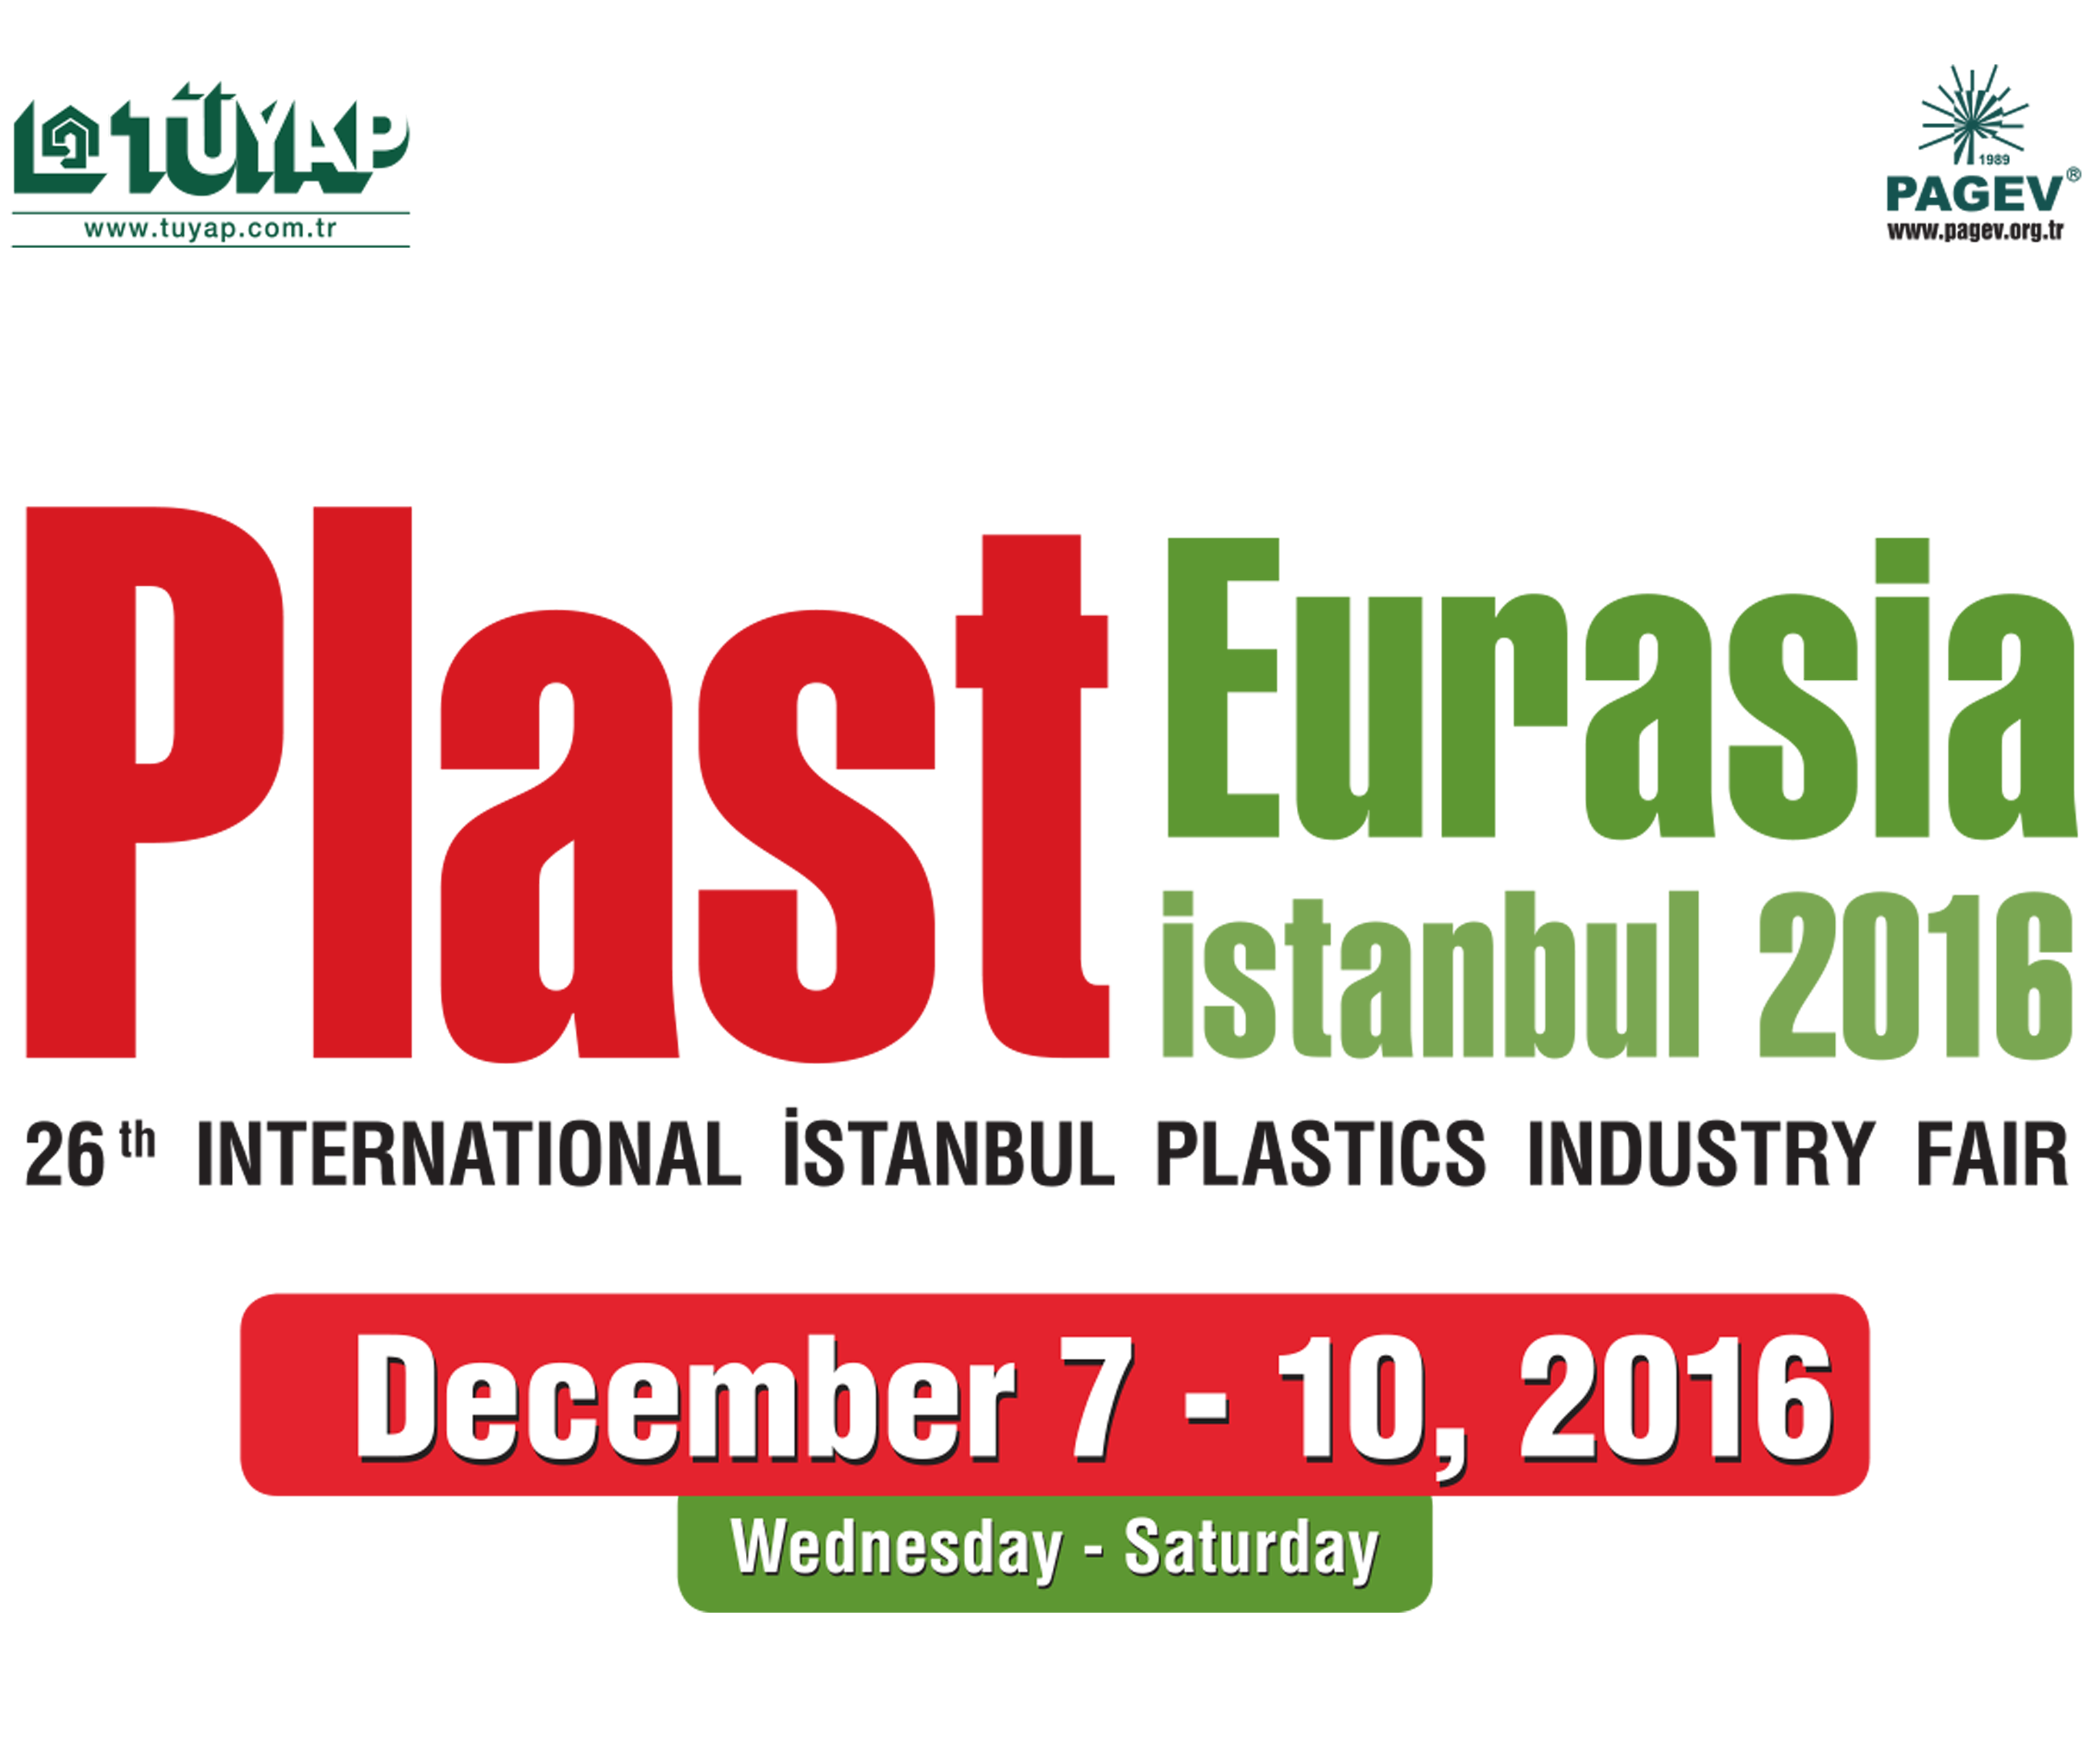 Plast Eurasia 2016 in Istanbul